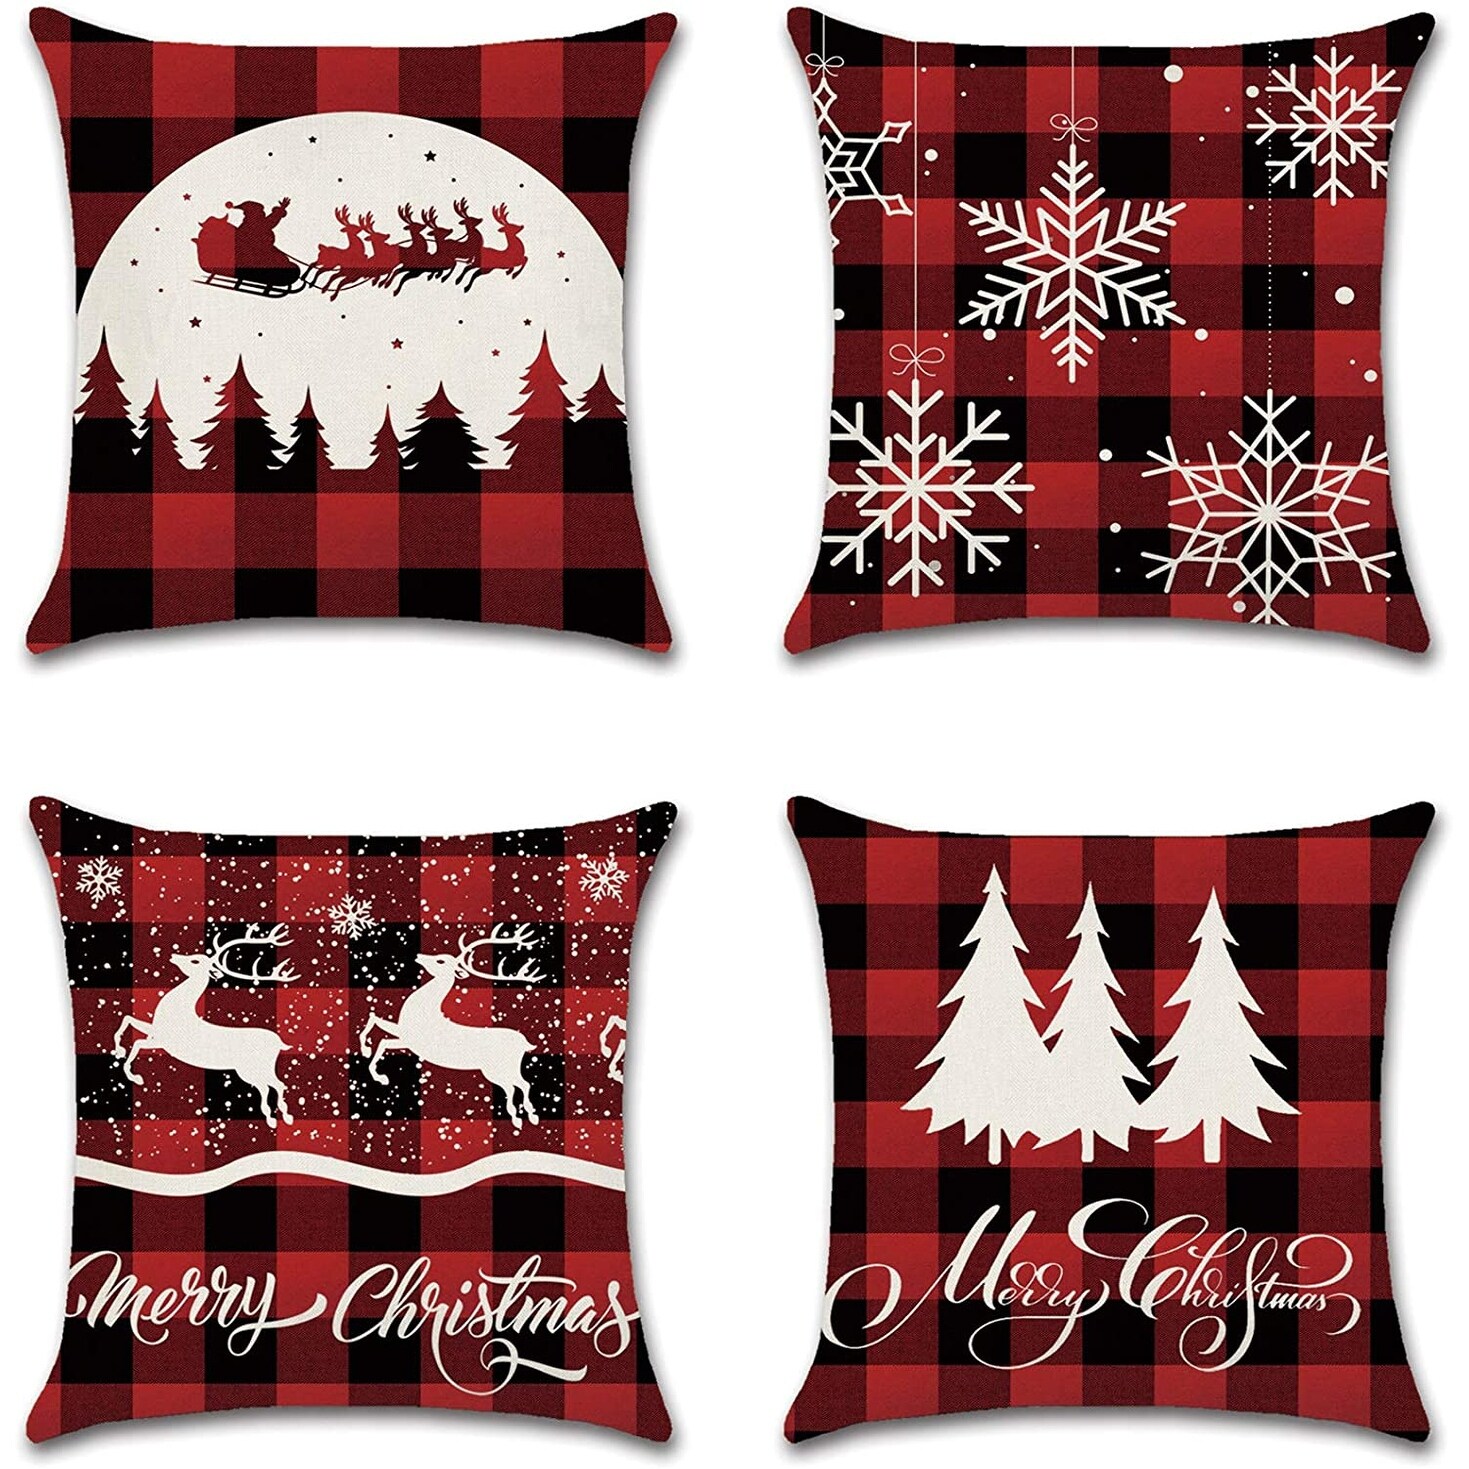 4pcs Blue Christmas Pillow Cases, Farmhouse Christmas Ornaments